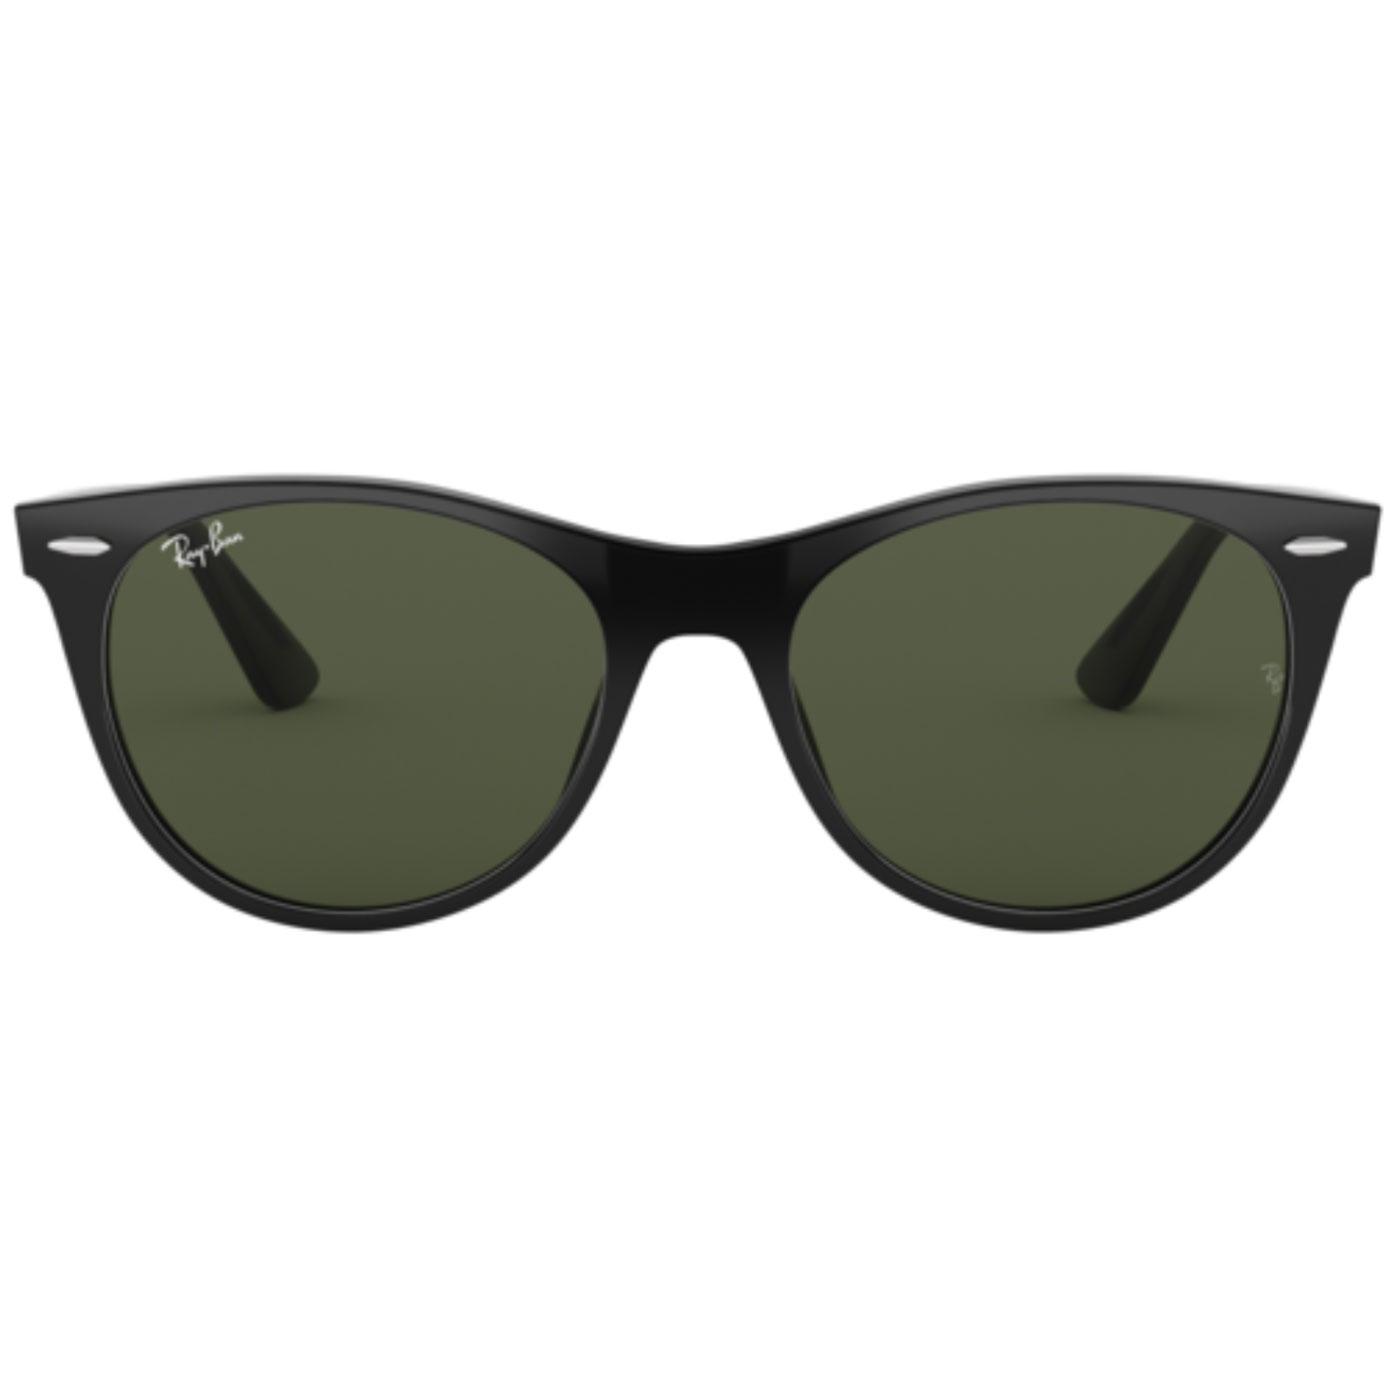 Wayfarer II RAY-BAN Retro Rounded Sunglasses Black